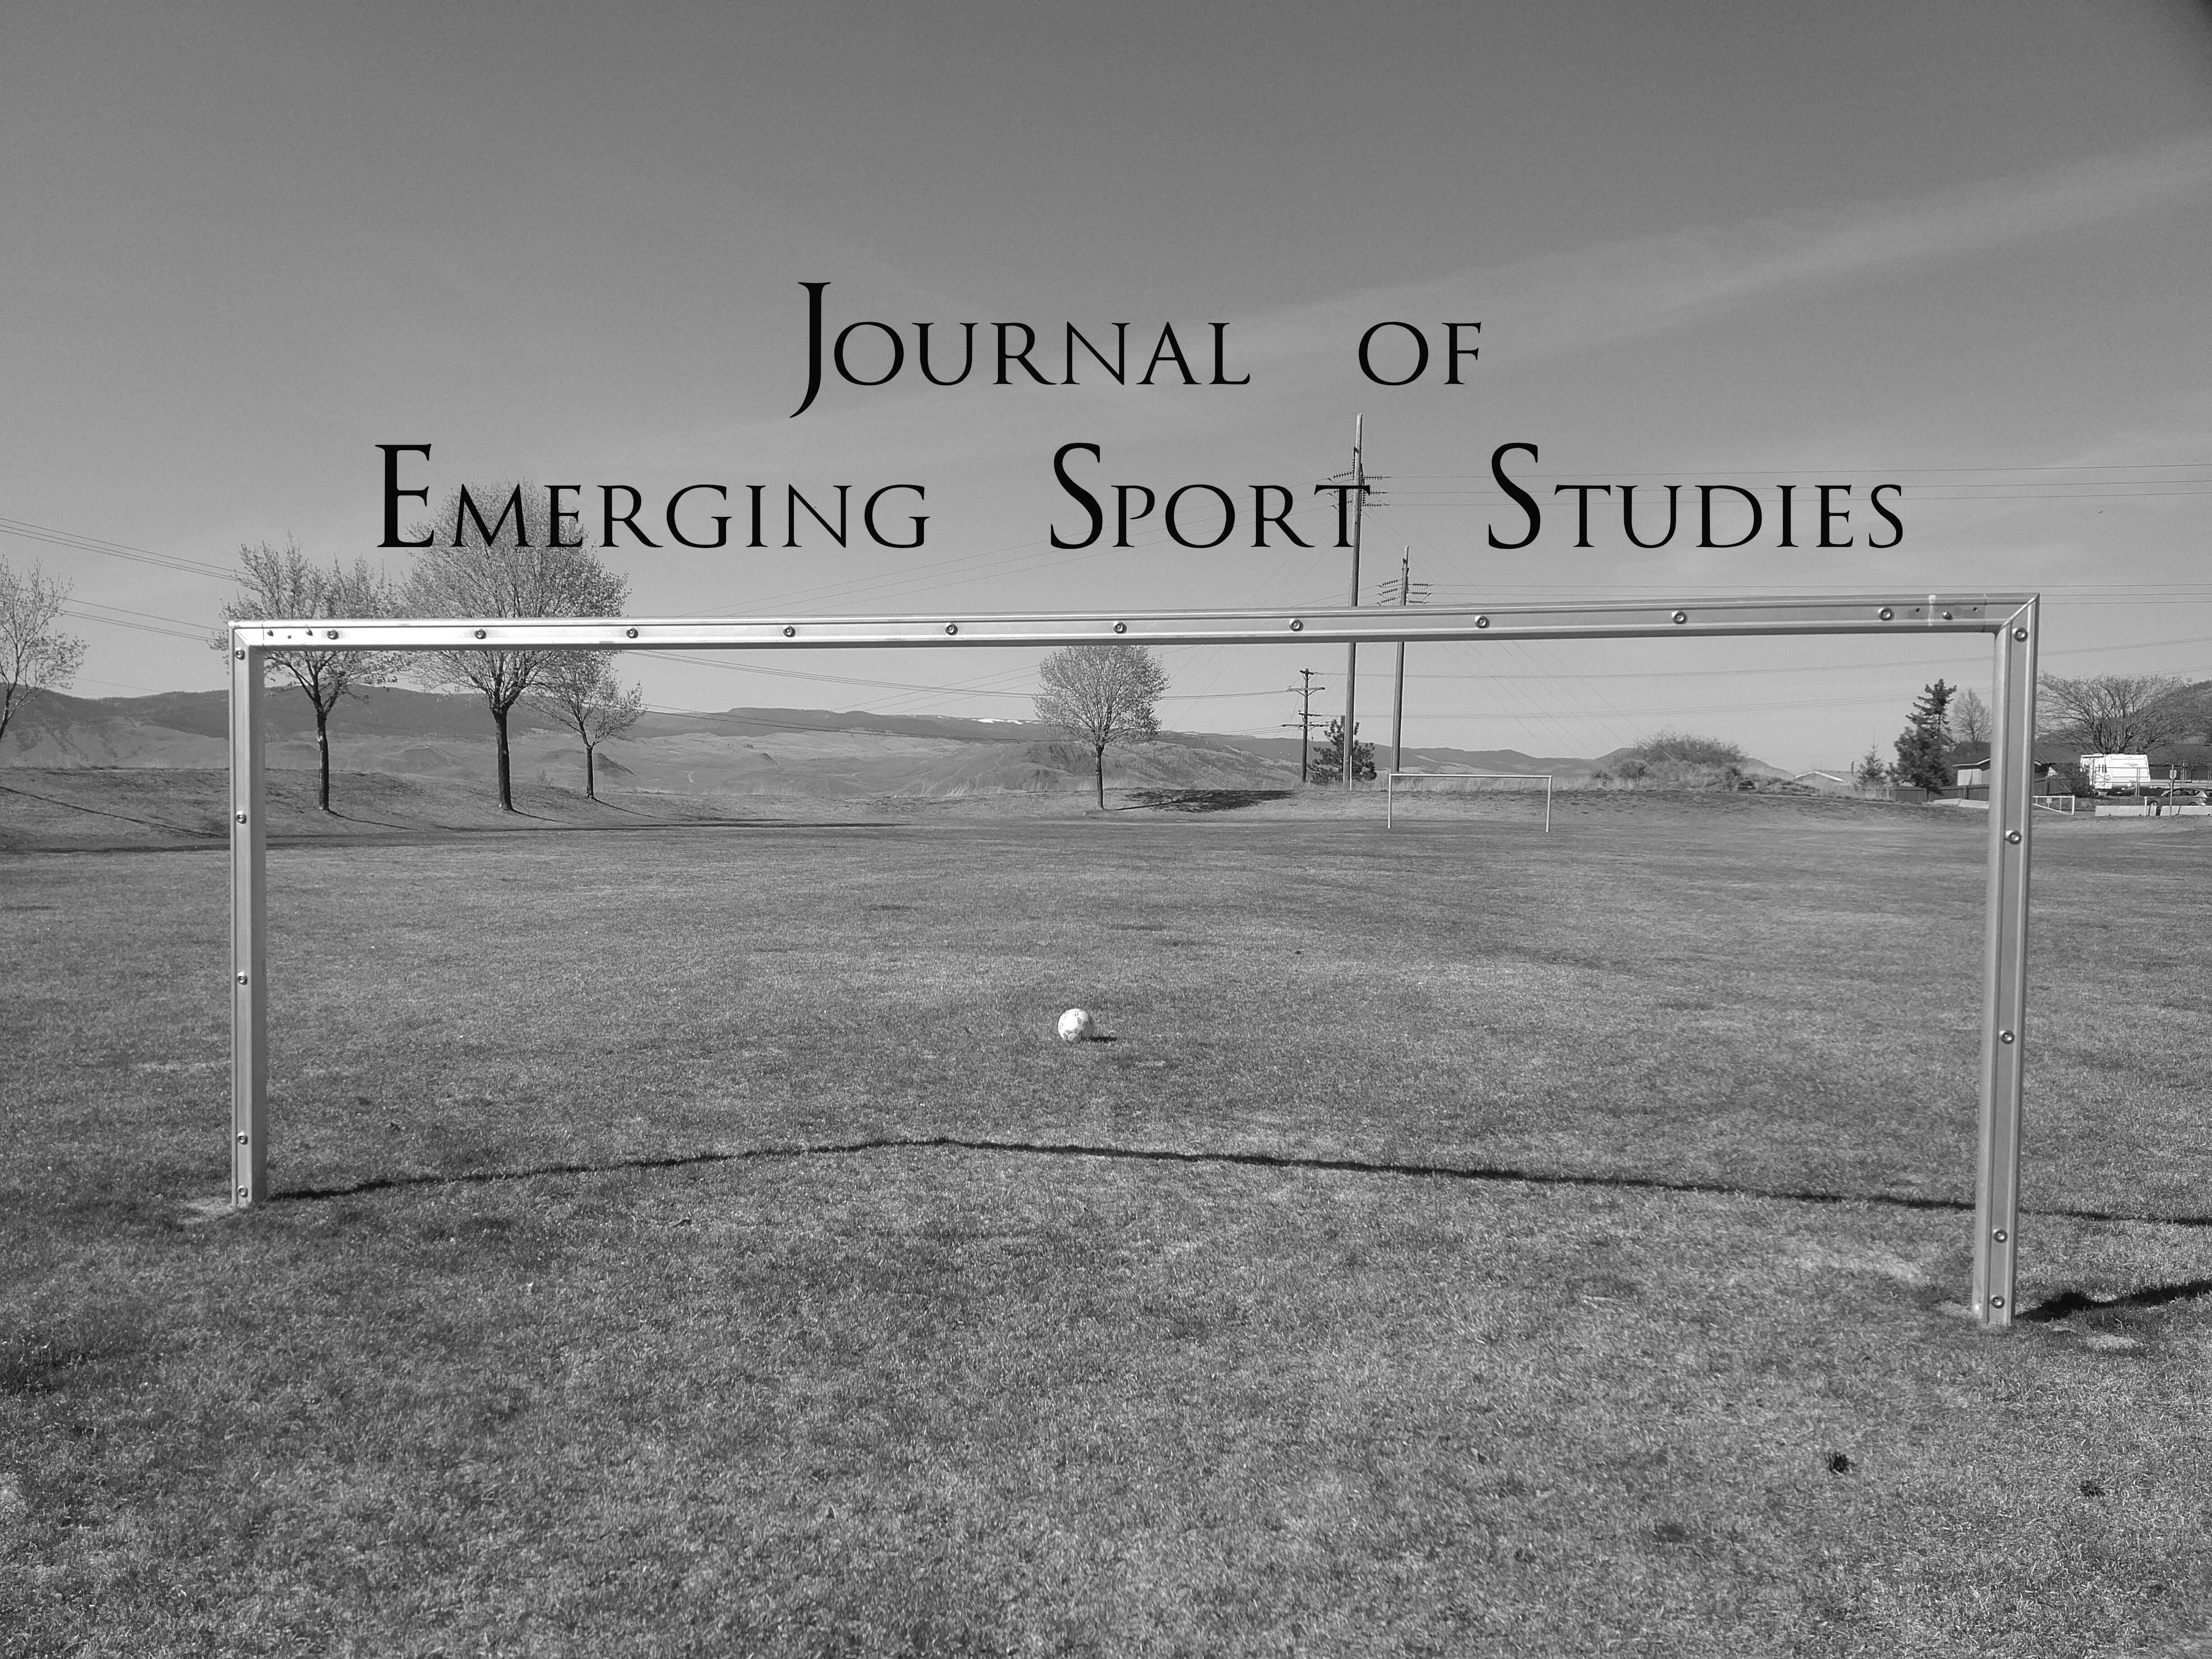 The Journal of Emerging Sport Studies